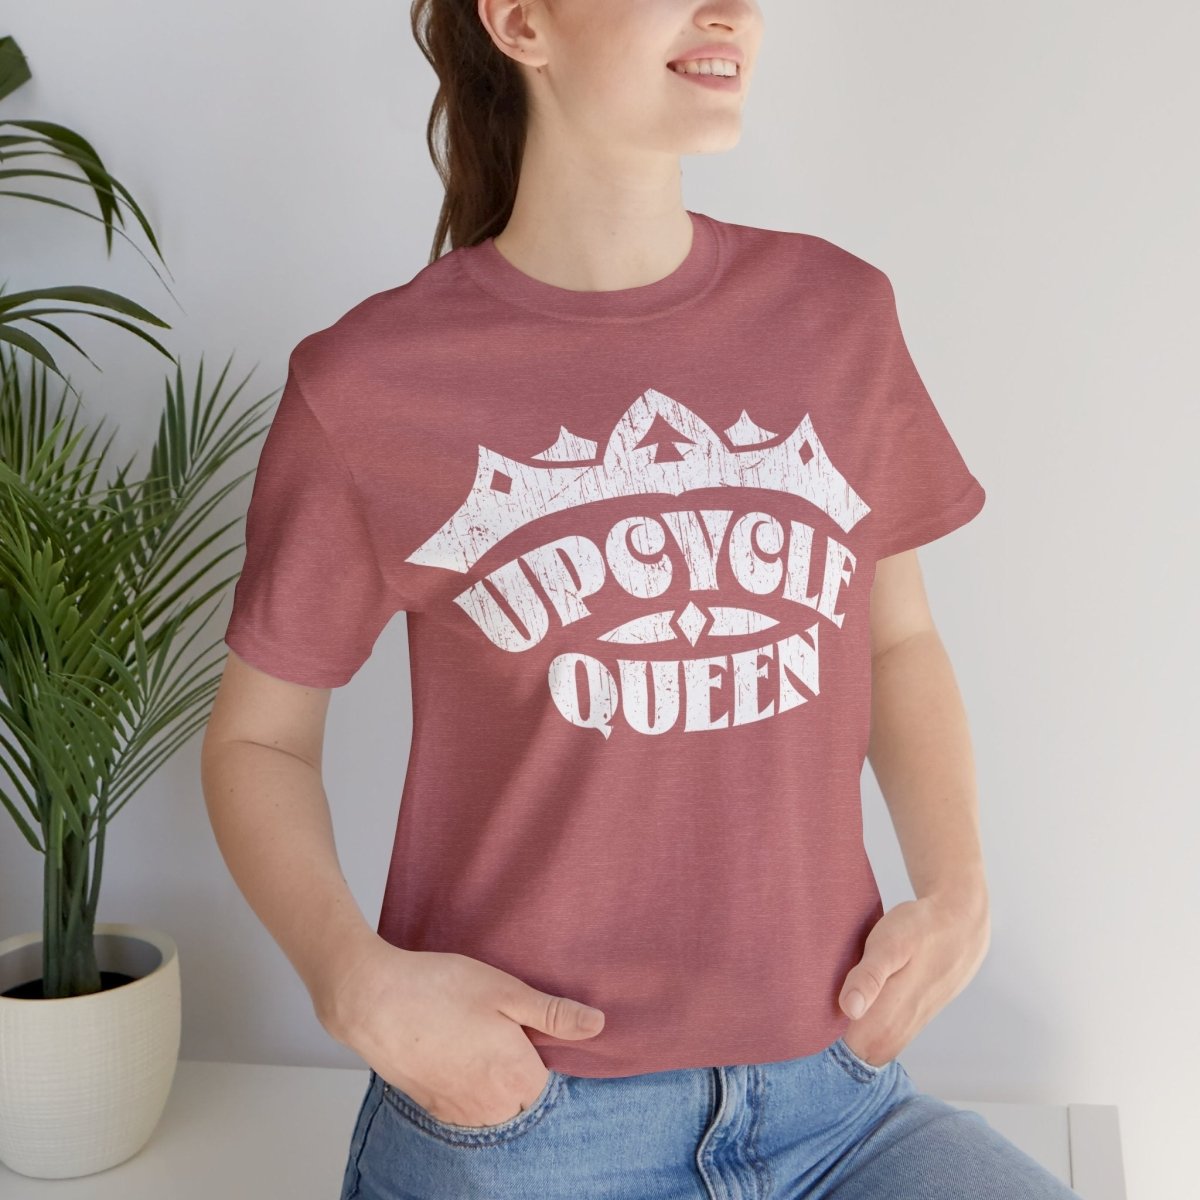 Upcycle Queen Premium T-Shirt, ReUse, DIY, Home Made, Recycle, Garage Sales, Flea Markets, Antiques, Junkin' Genius